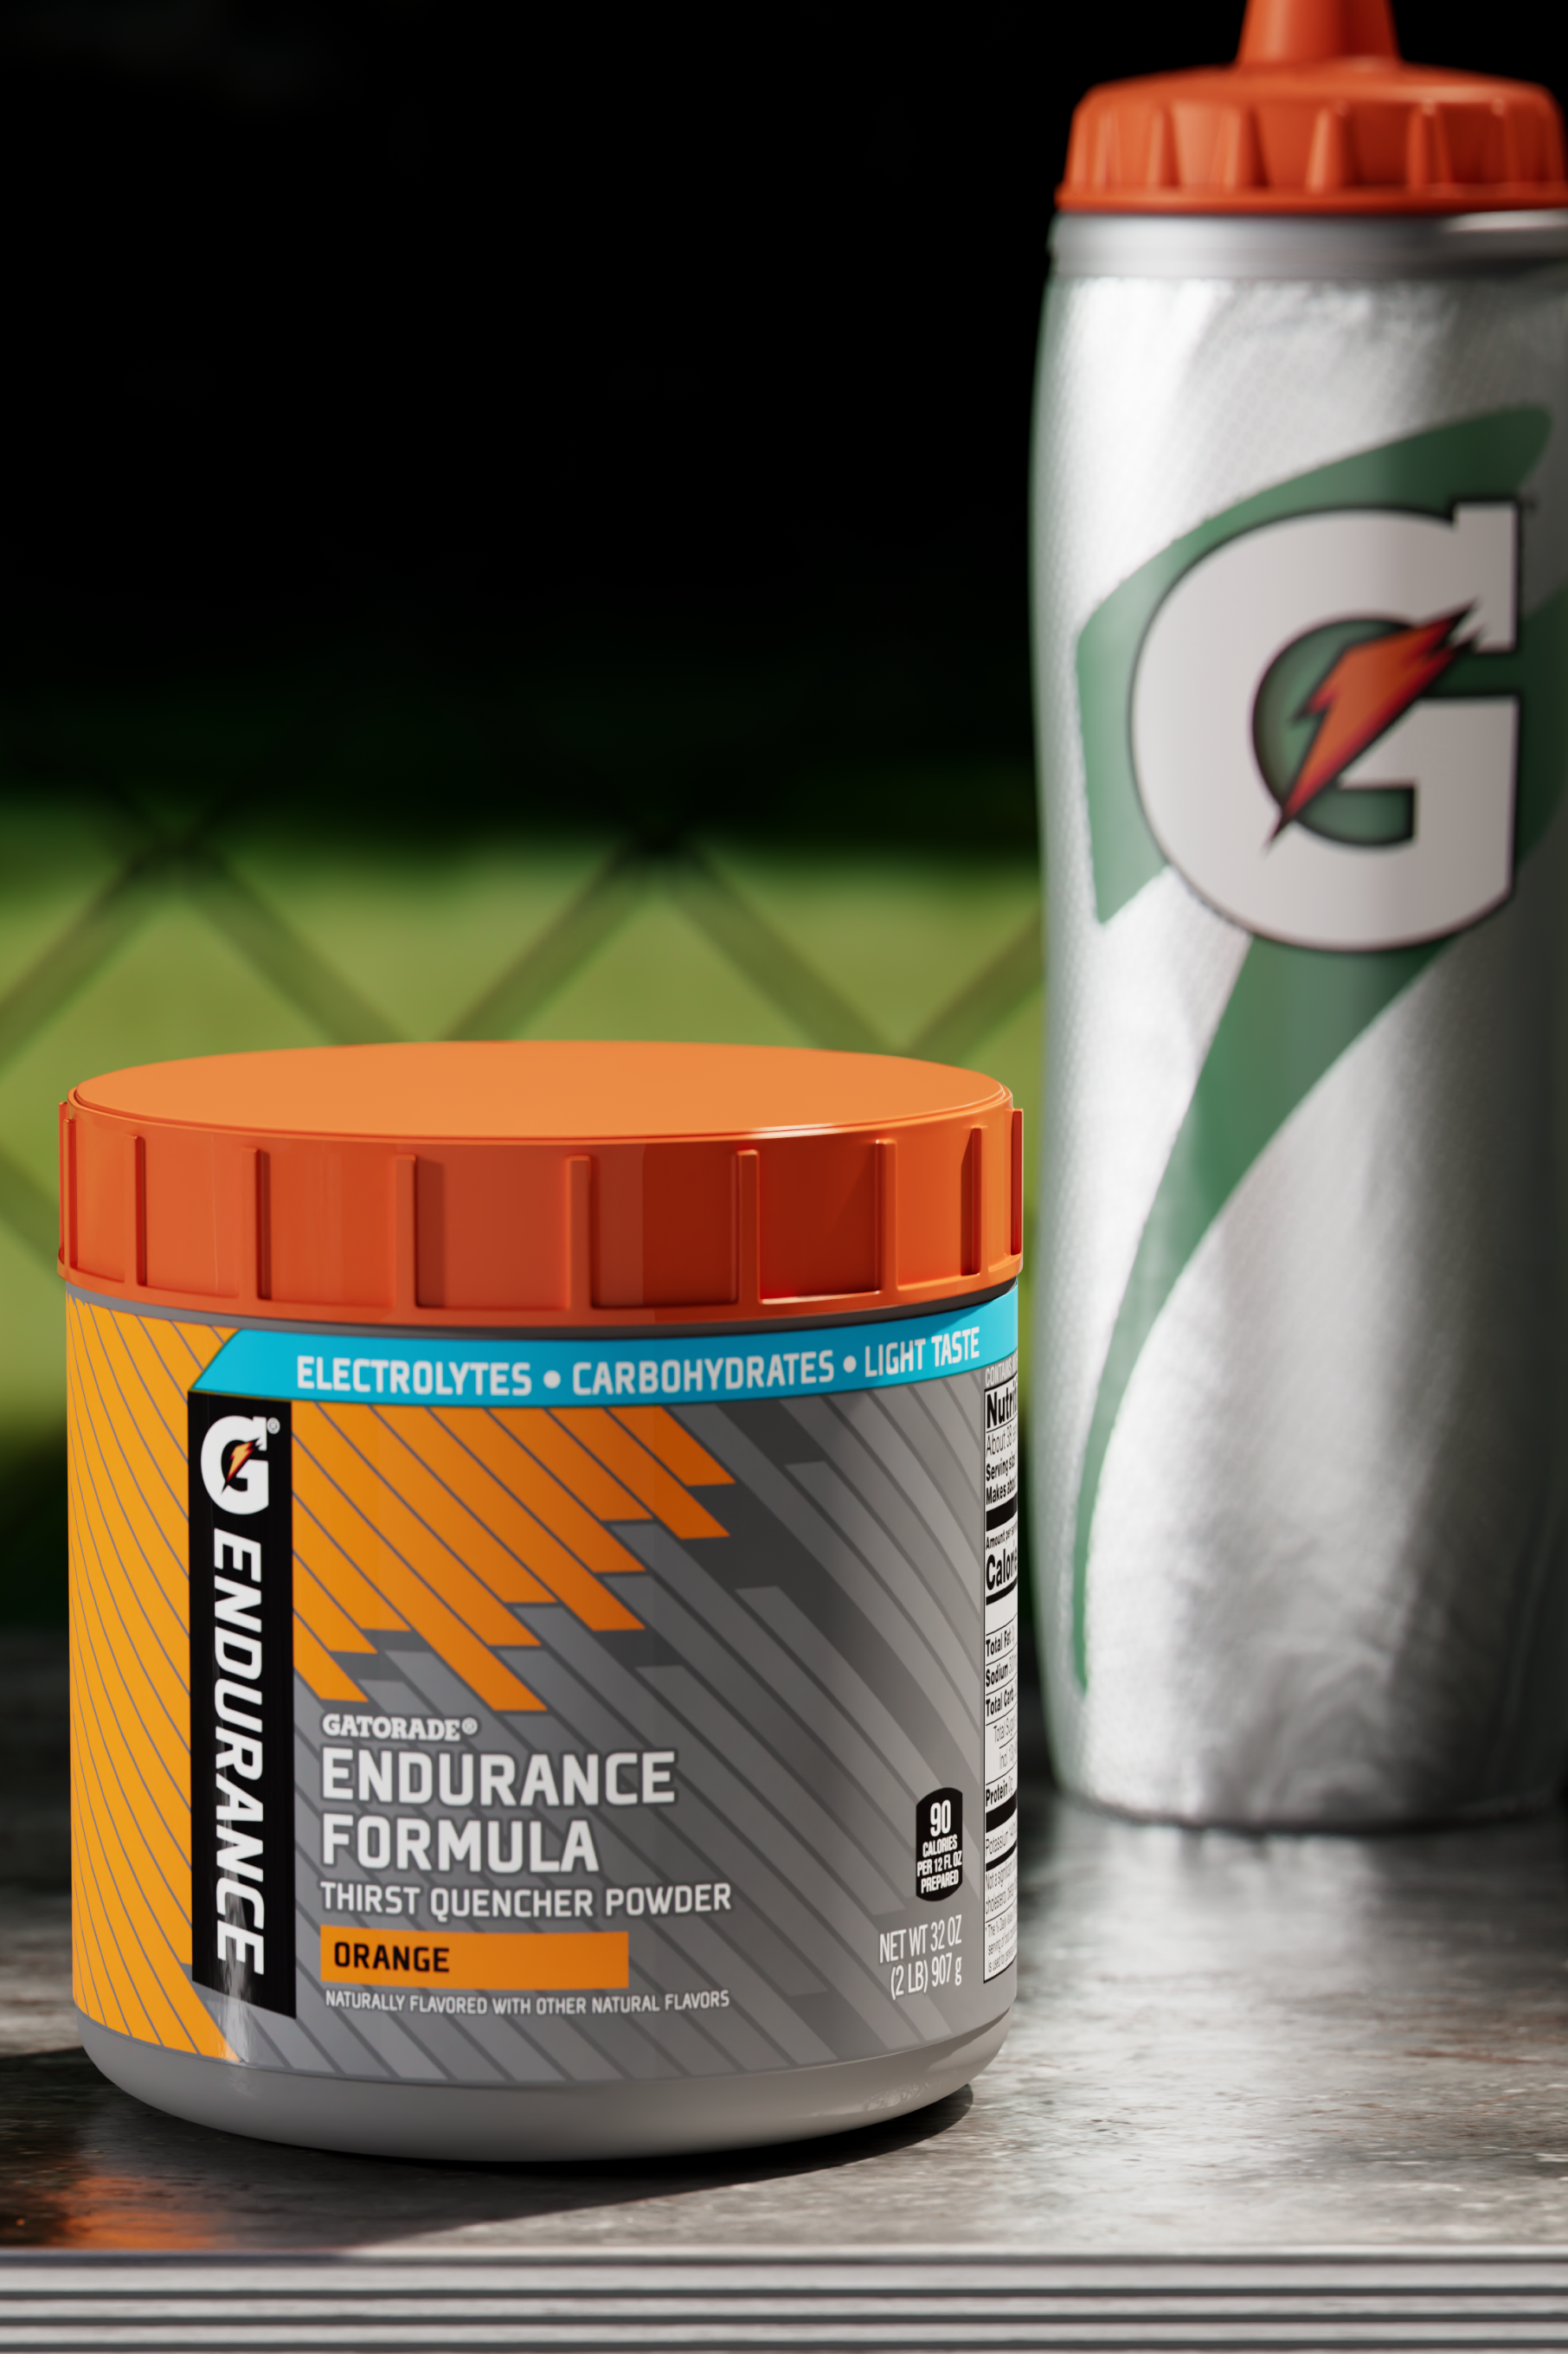 Endurance canister orange with Gx bottle